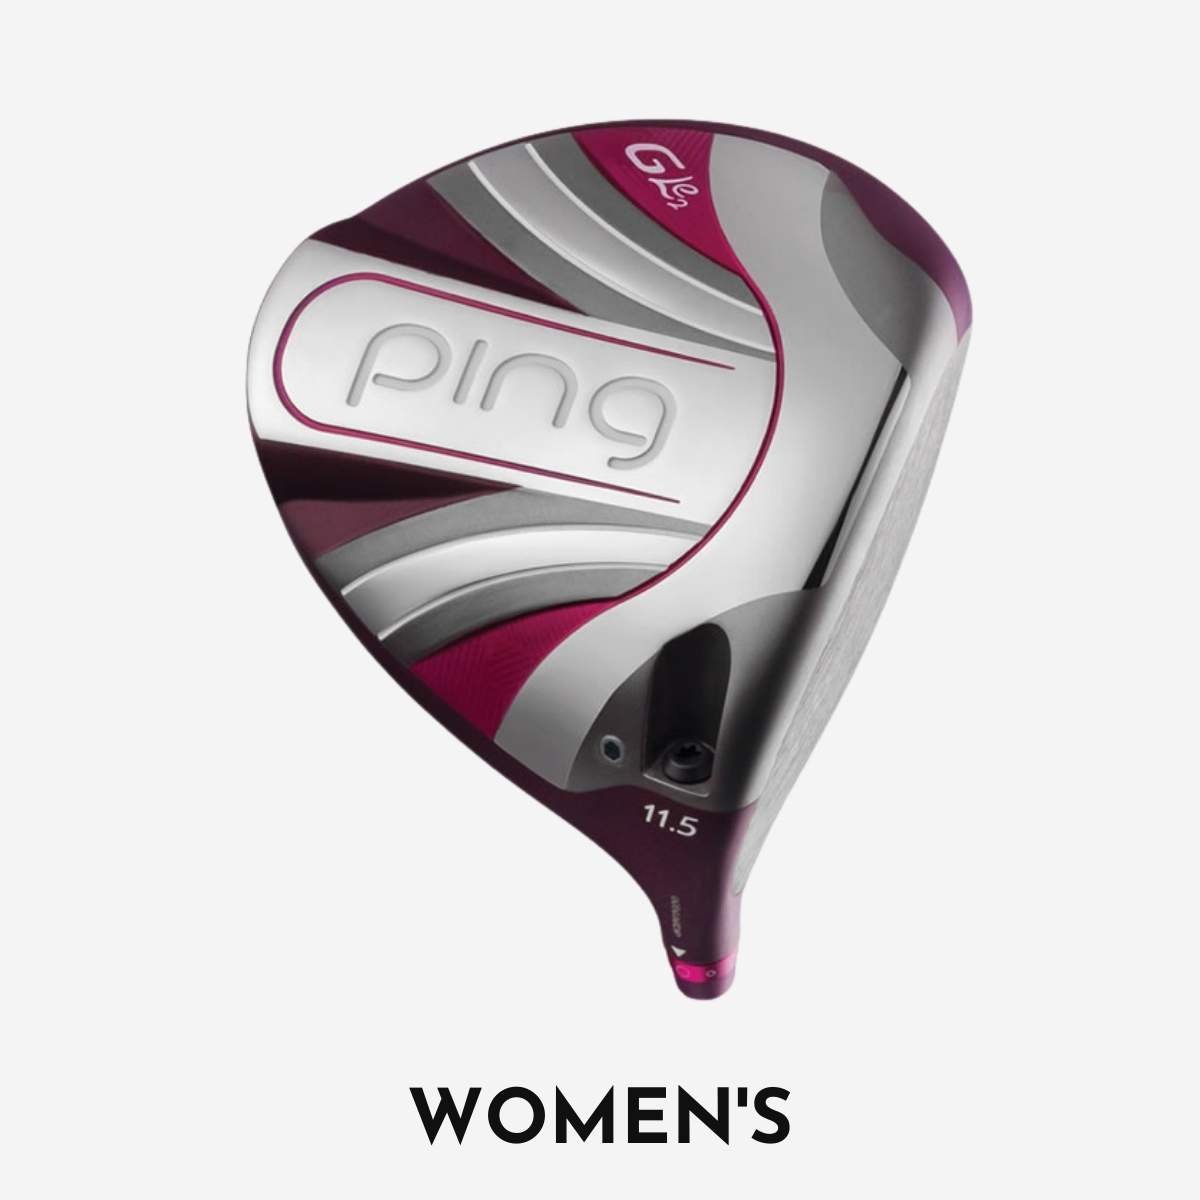 Ping Women's Clubs